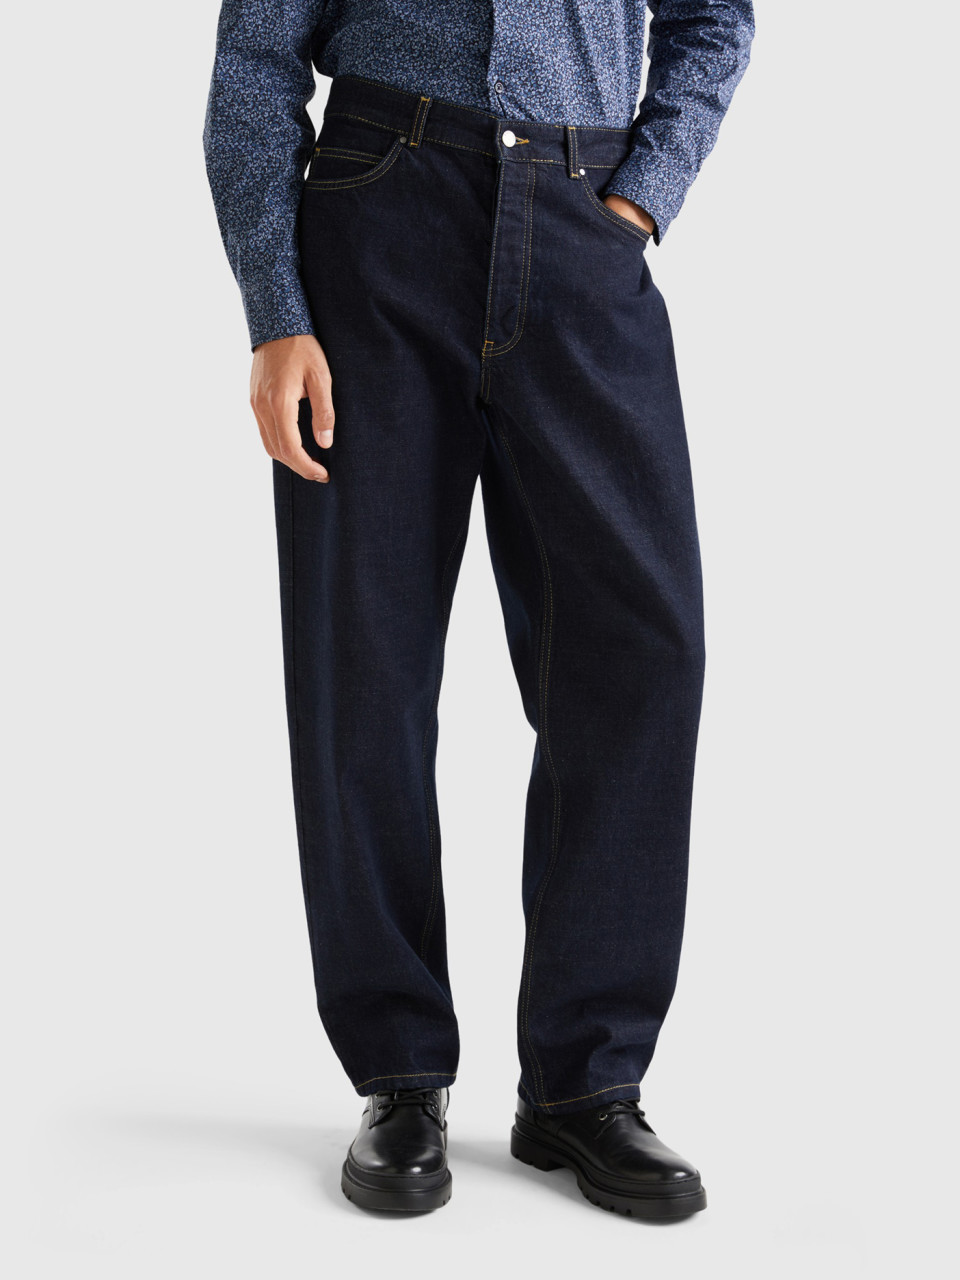 Benetton, Jeans Style Workwear, Bleu Foncé, Homme